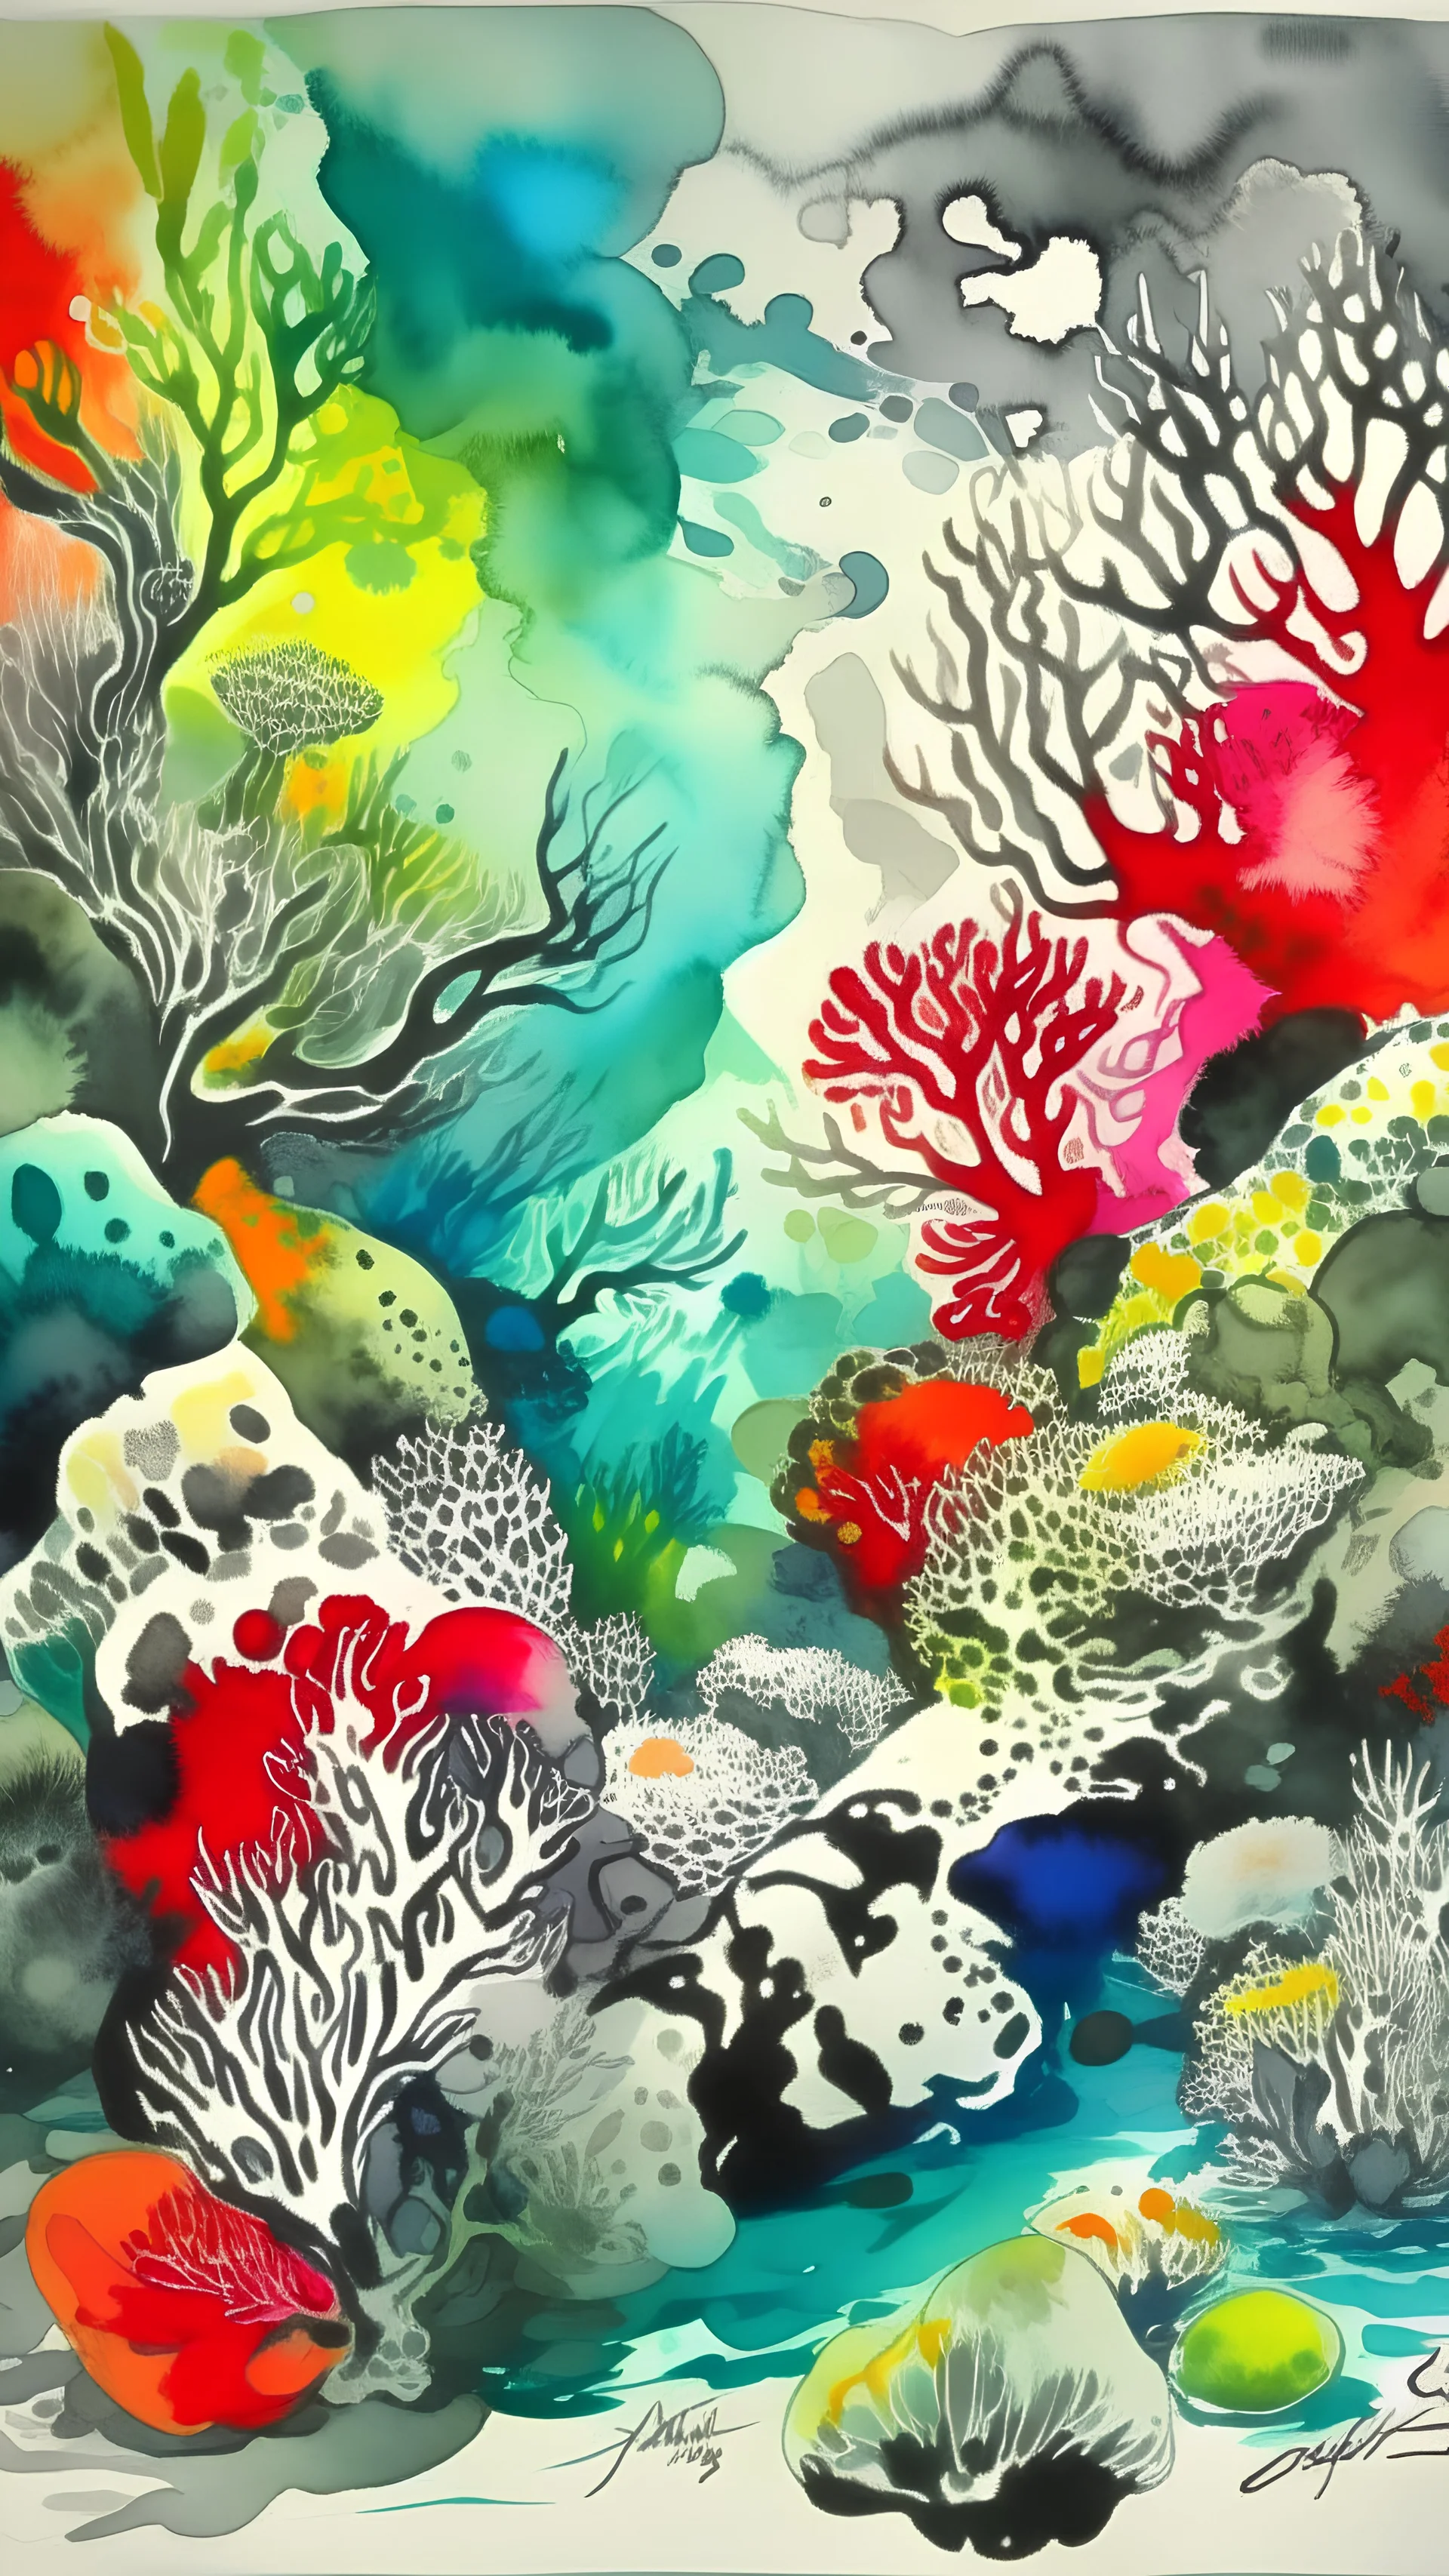 Ink painting, corral reef